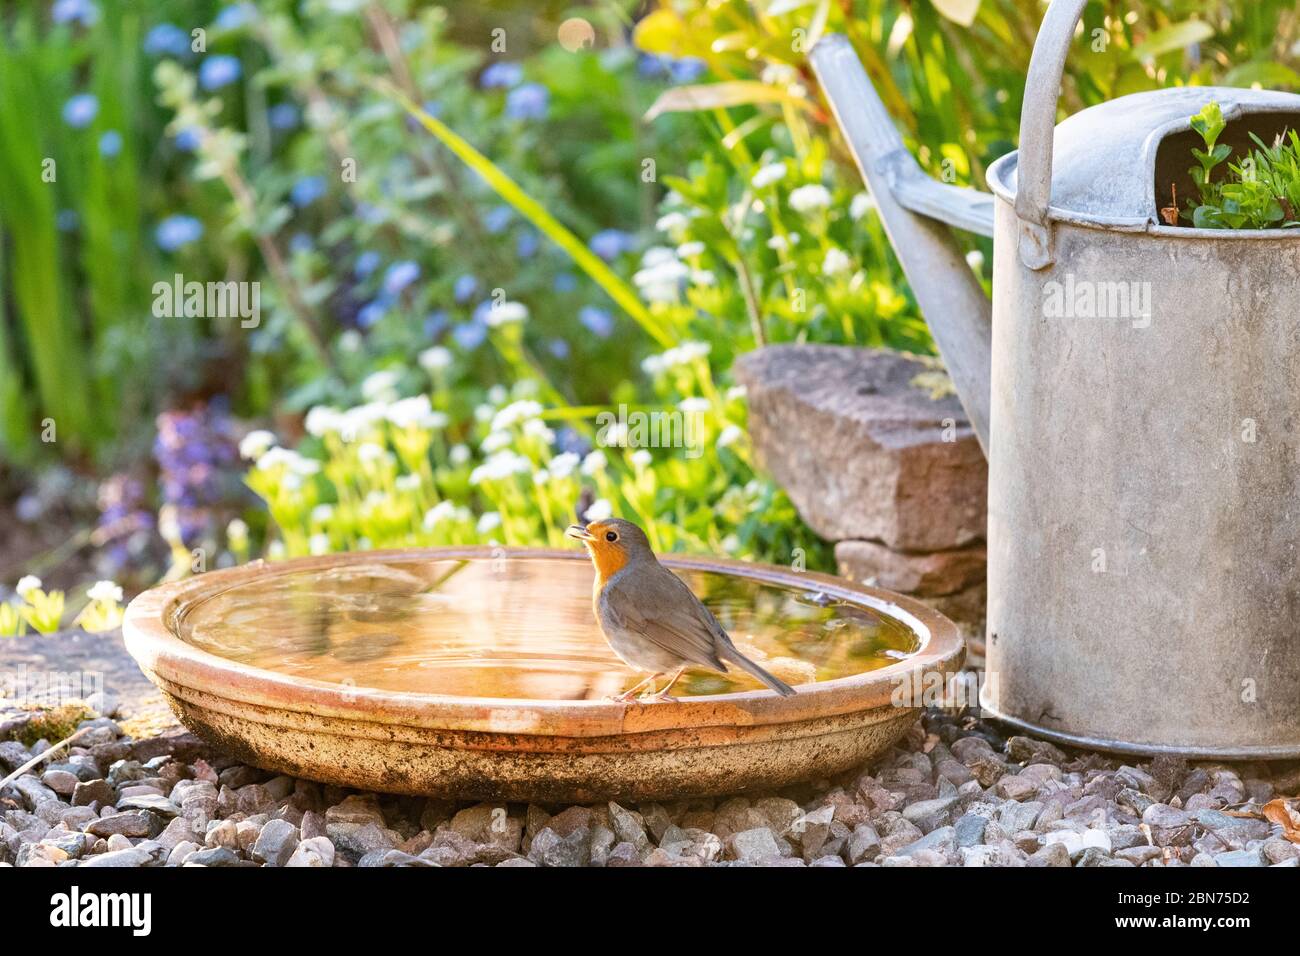 bird bath made from terracotta saucer in UK garden with a robin taking a drink - Scotland, UK Stock Photo